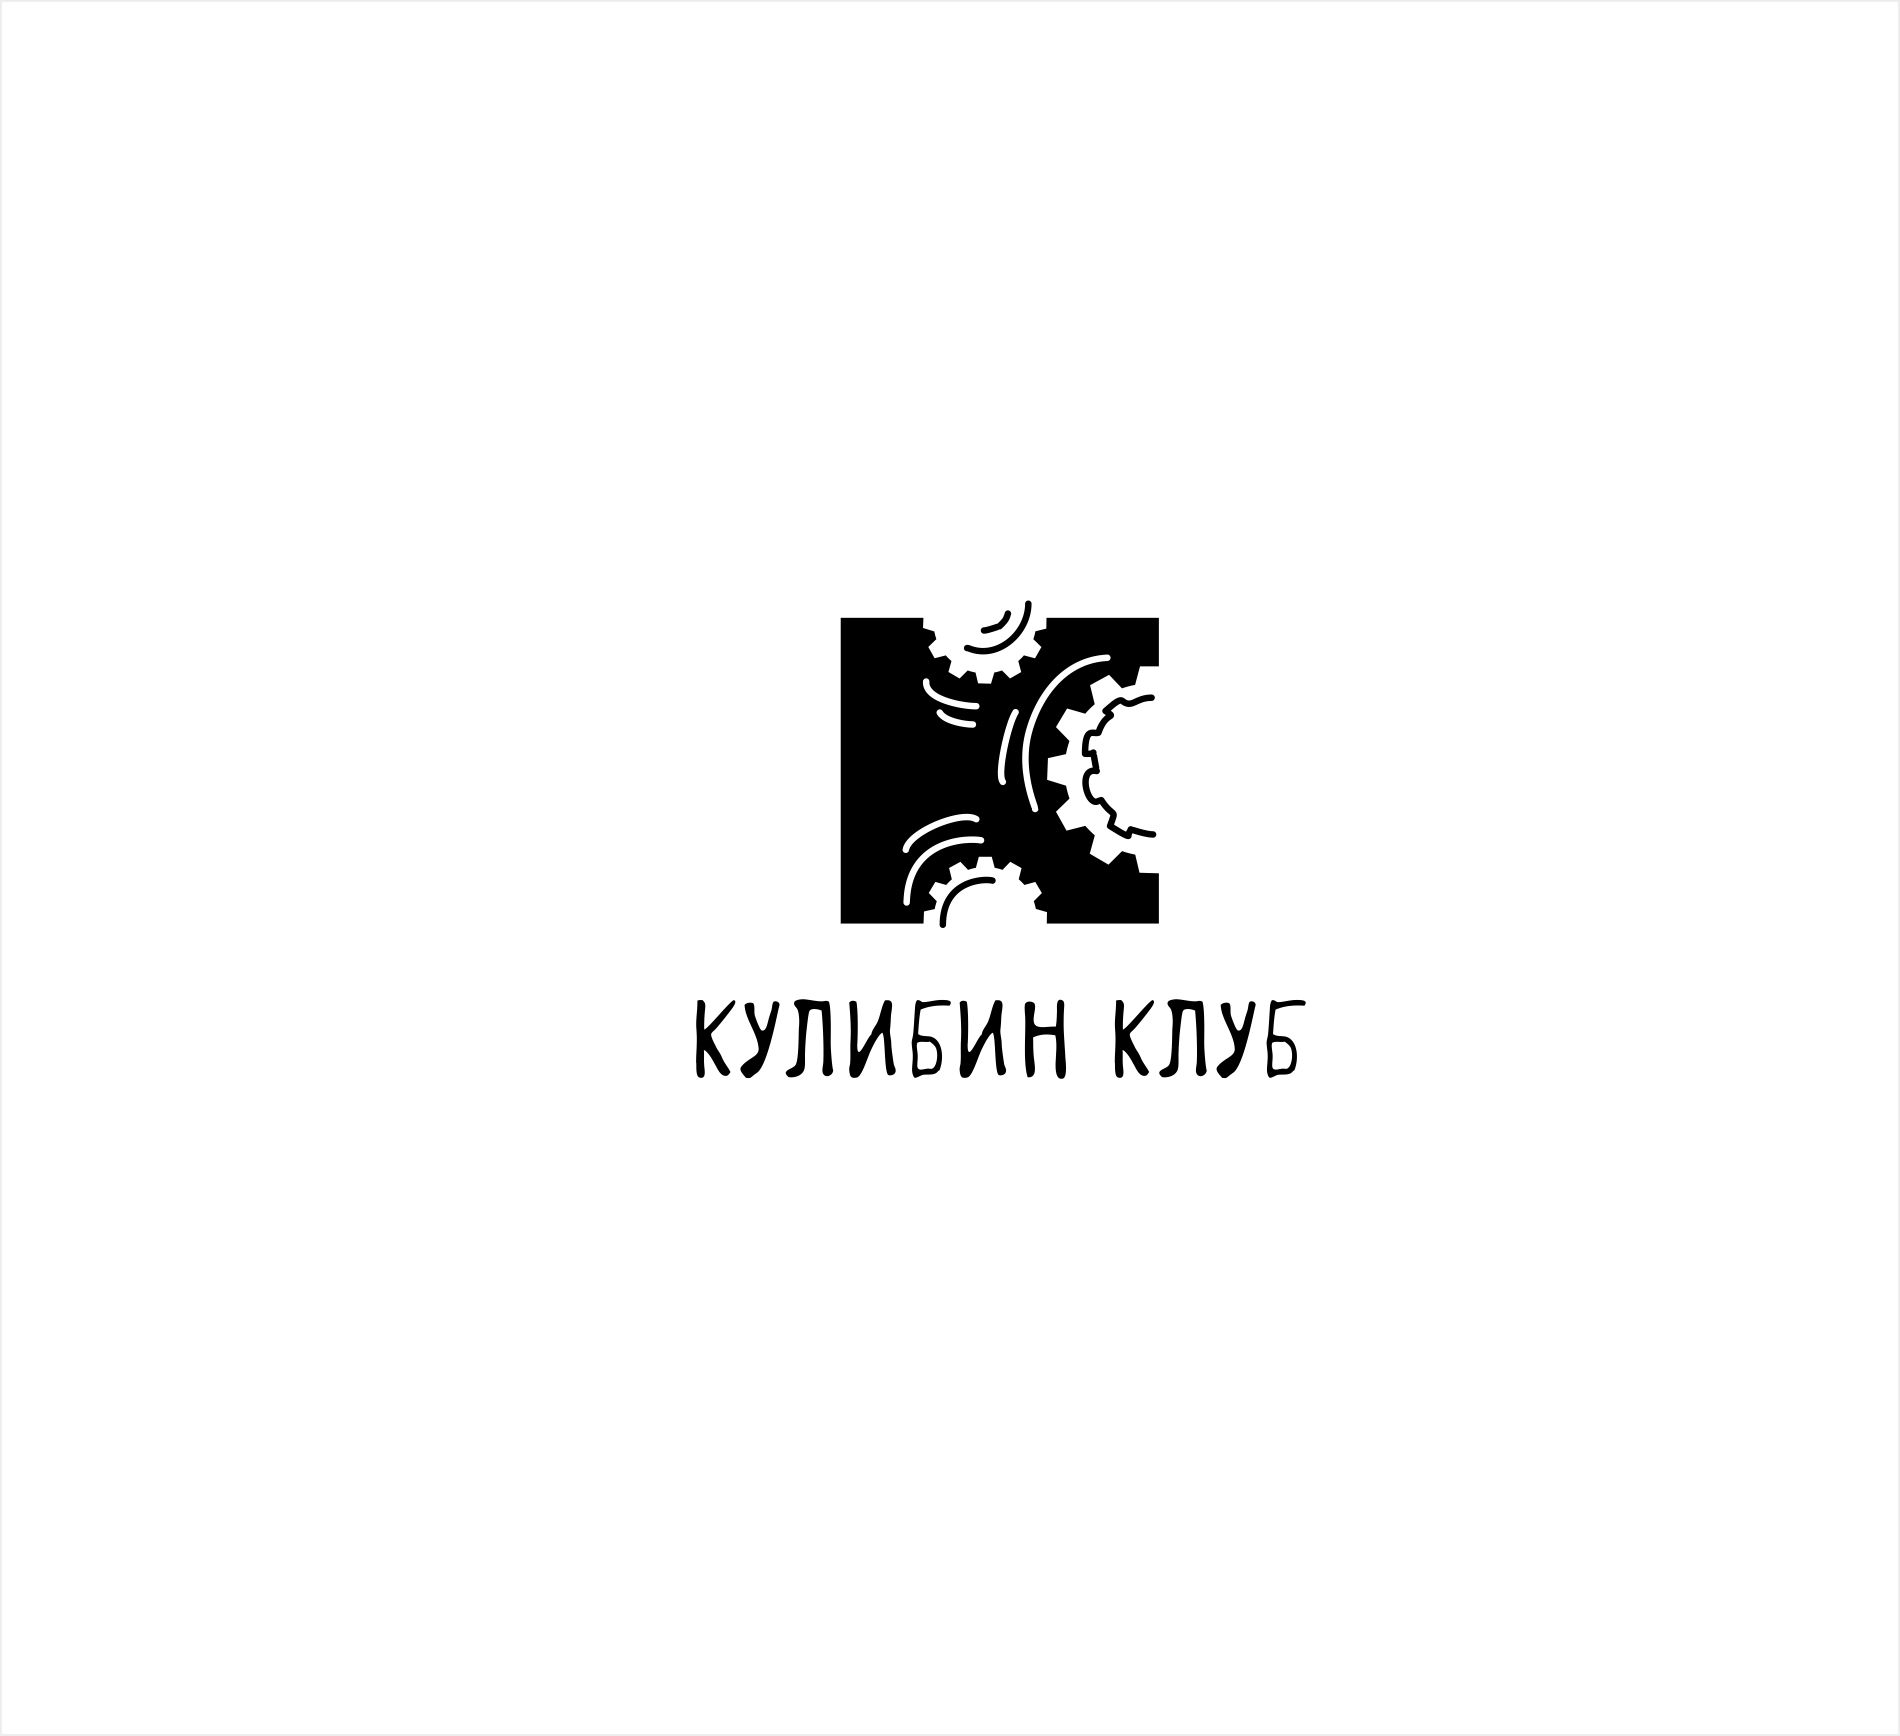 Логотип для Кулибин клуб или Kulibin club - дизайнер kras-sky